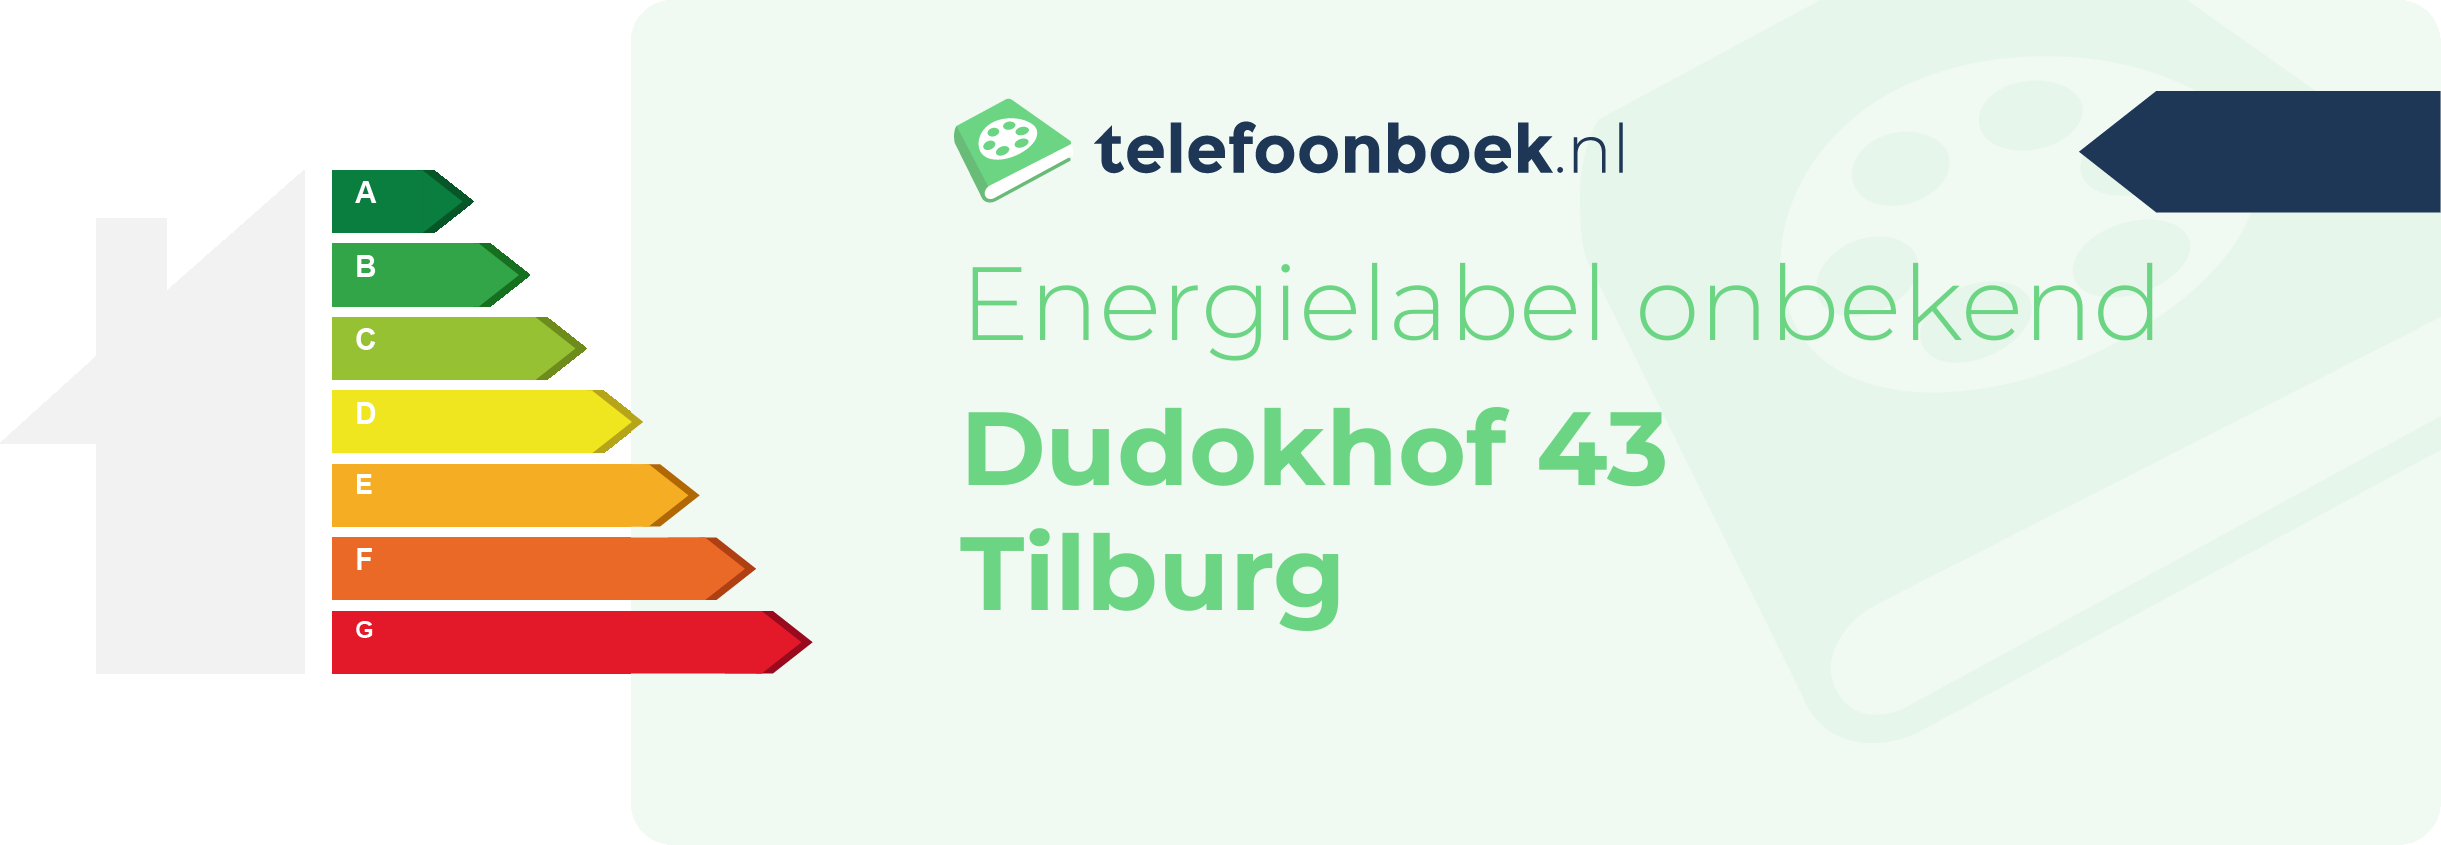 Energielabel Dudokhof 43 Tilburg